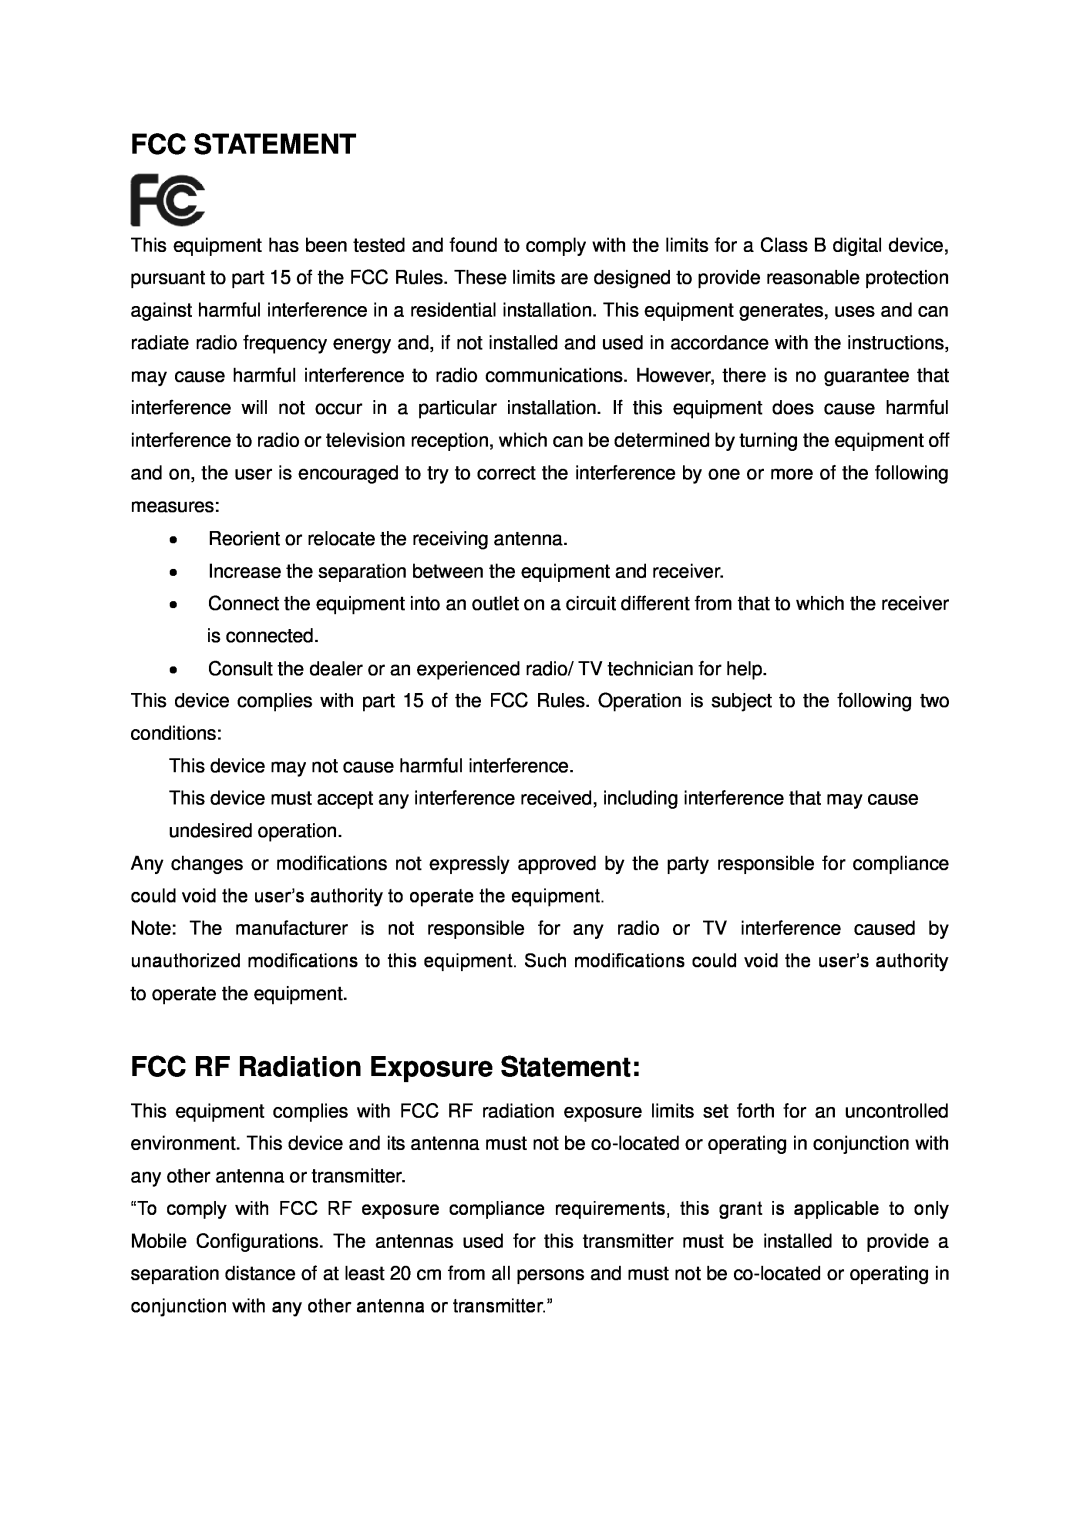 TP-Link M5350 manual Fcc Statement, FCC RF Radiation Exposure Statement 